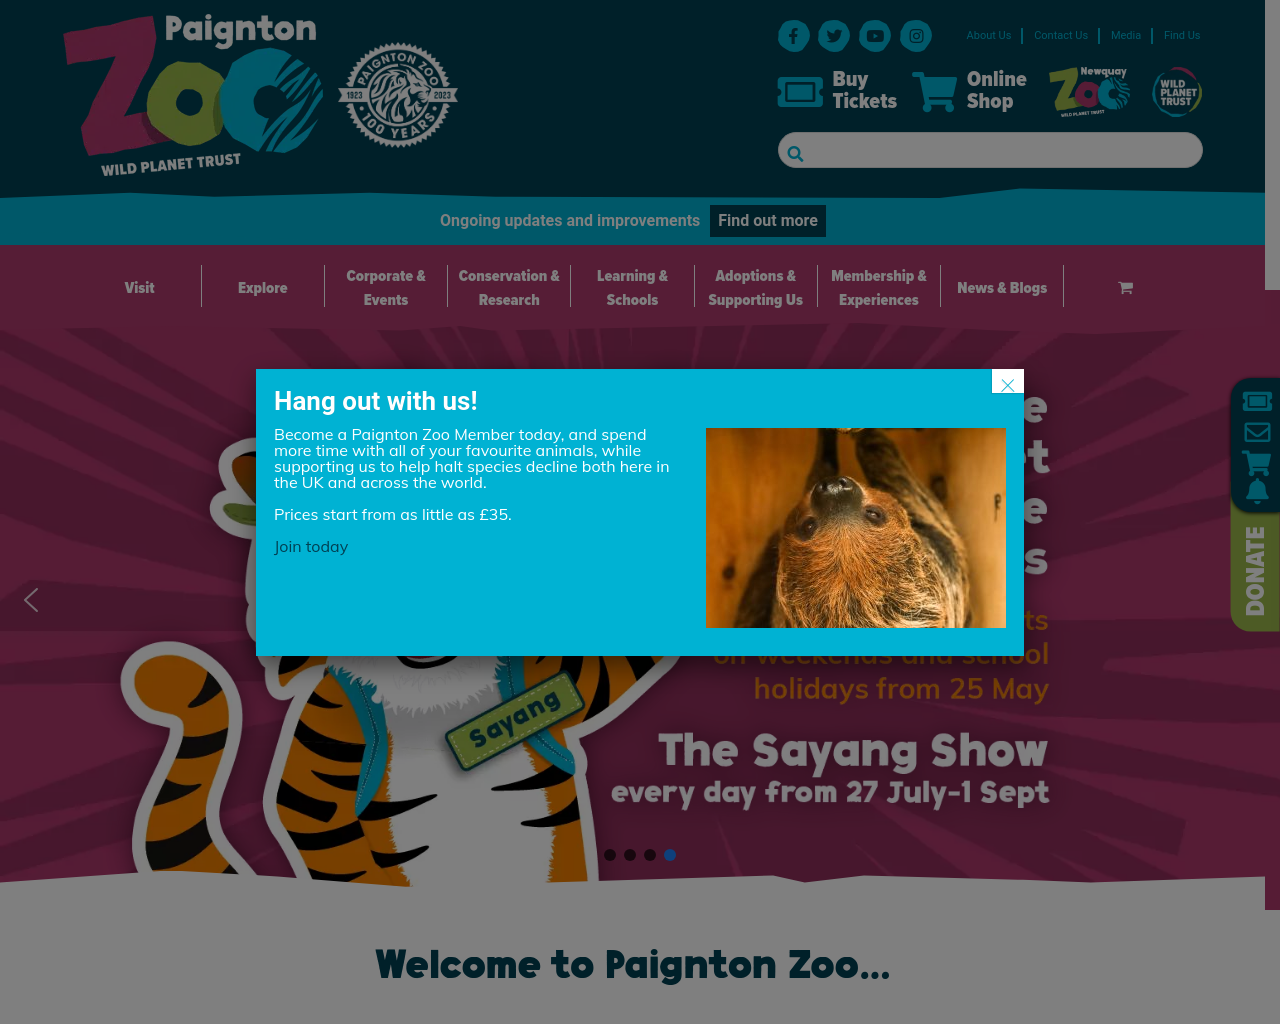 paigntonzoo.org.uk